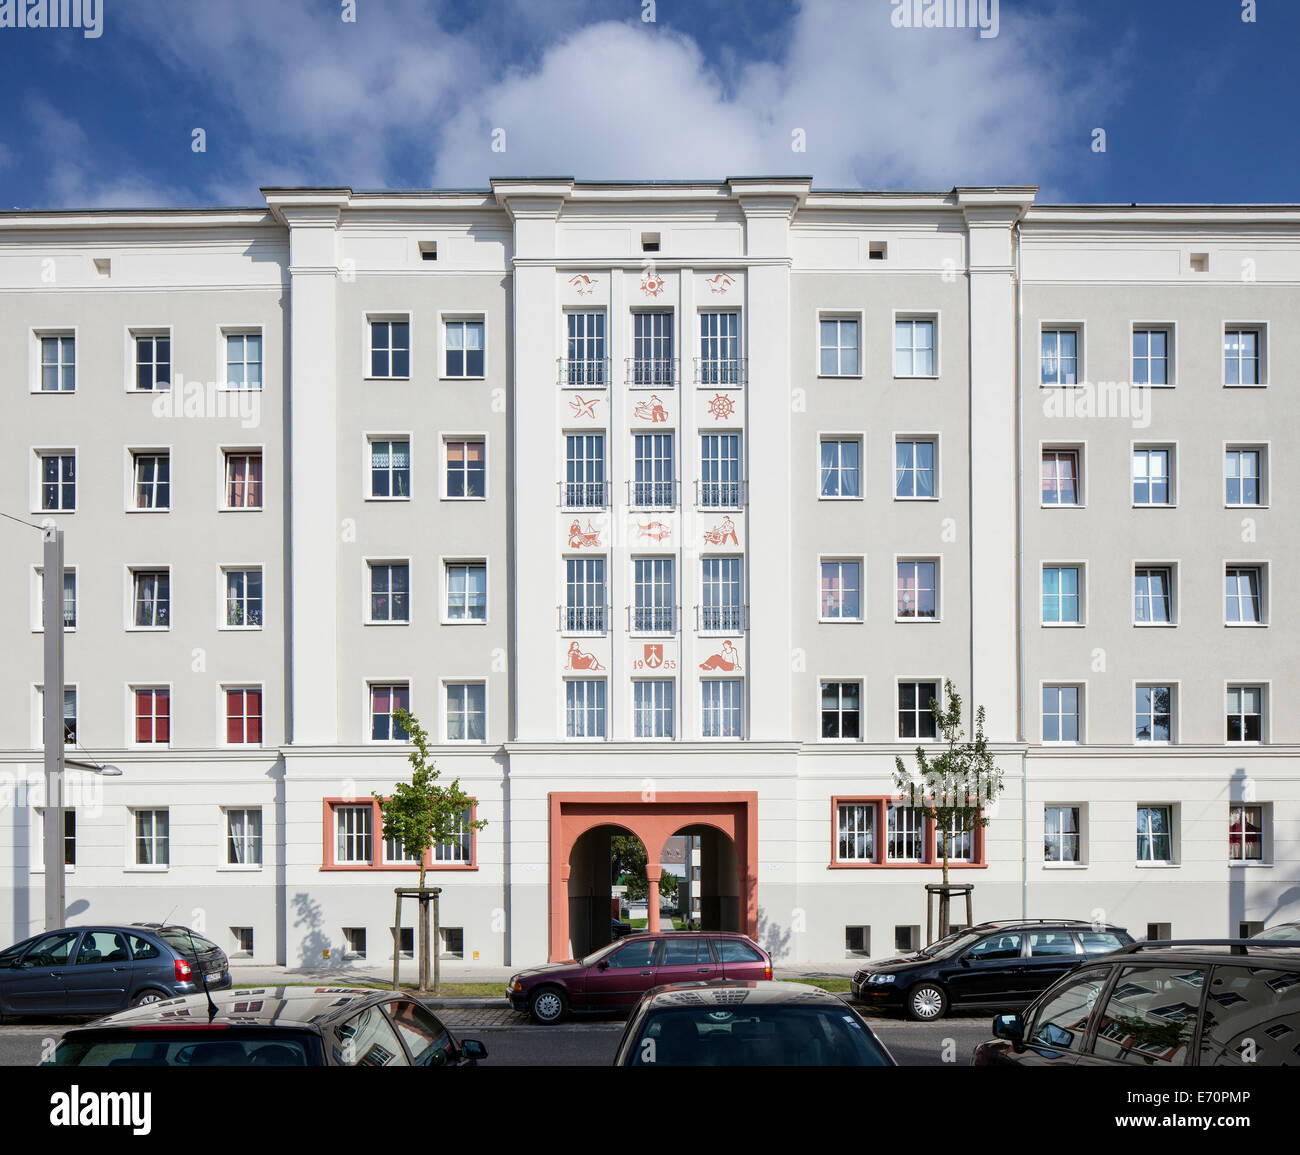 Frankendamm residence10-14 building, dans le style de la modernité socialiste, Stralsund, Mecklembourg-Poméranie-Occidentale, Allemagne Banque D'Images